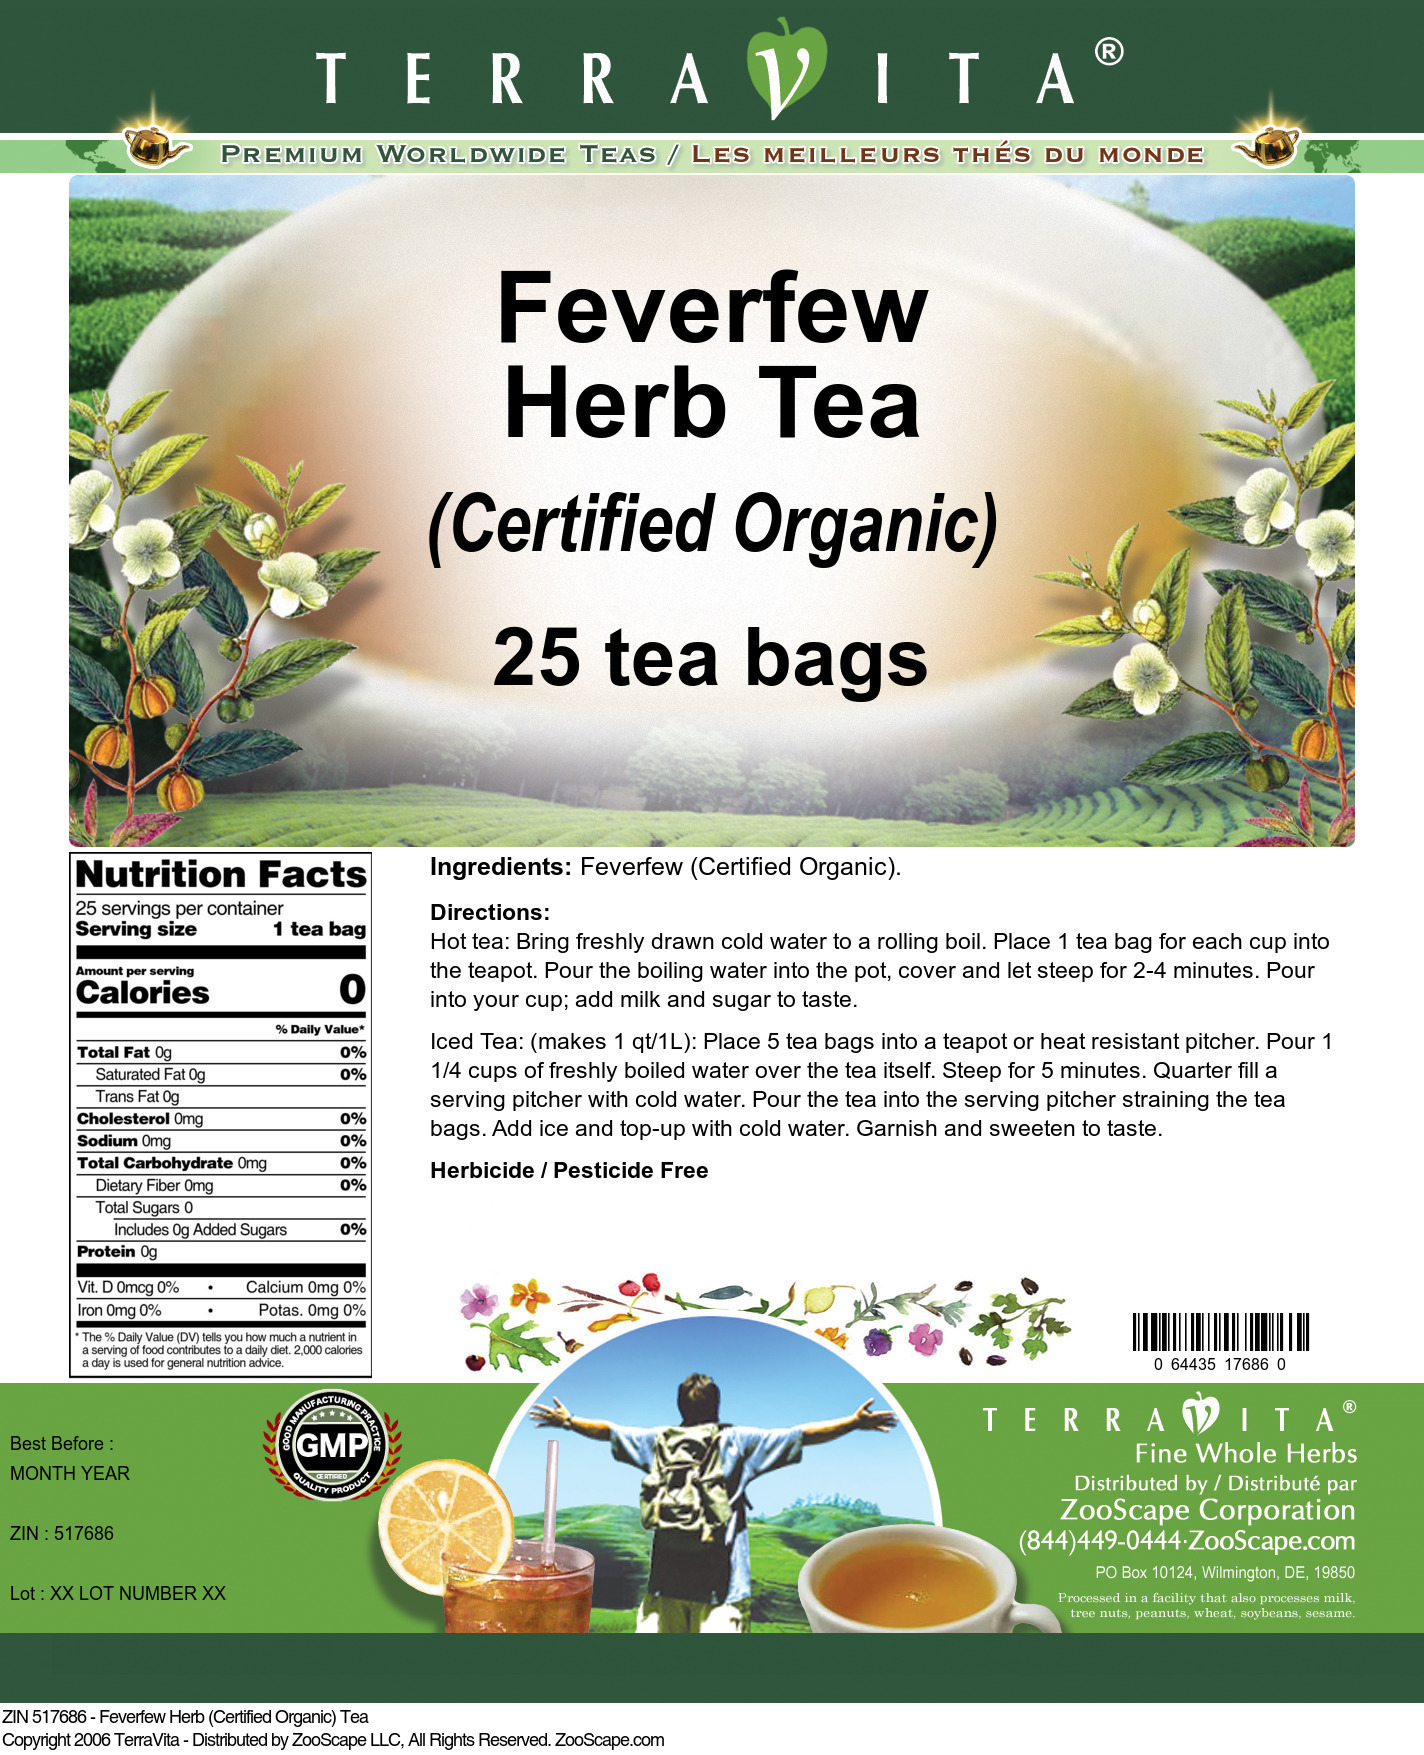 Feverfew Herb (Certified Organic) Tea - Label